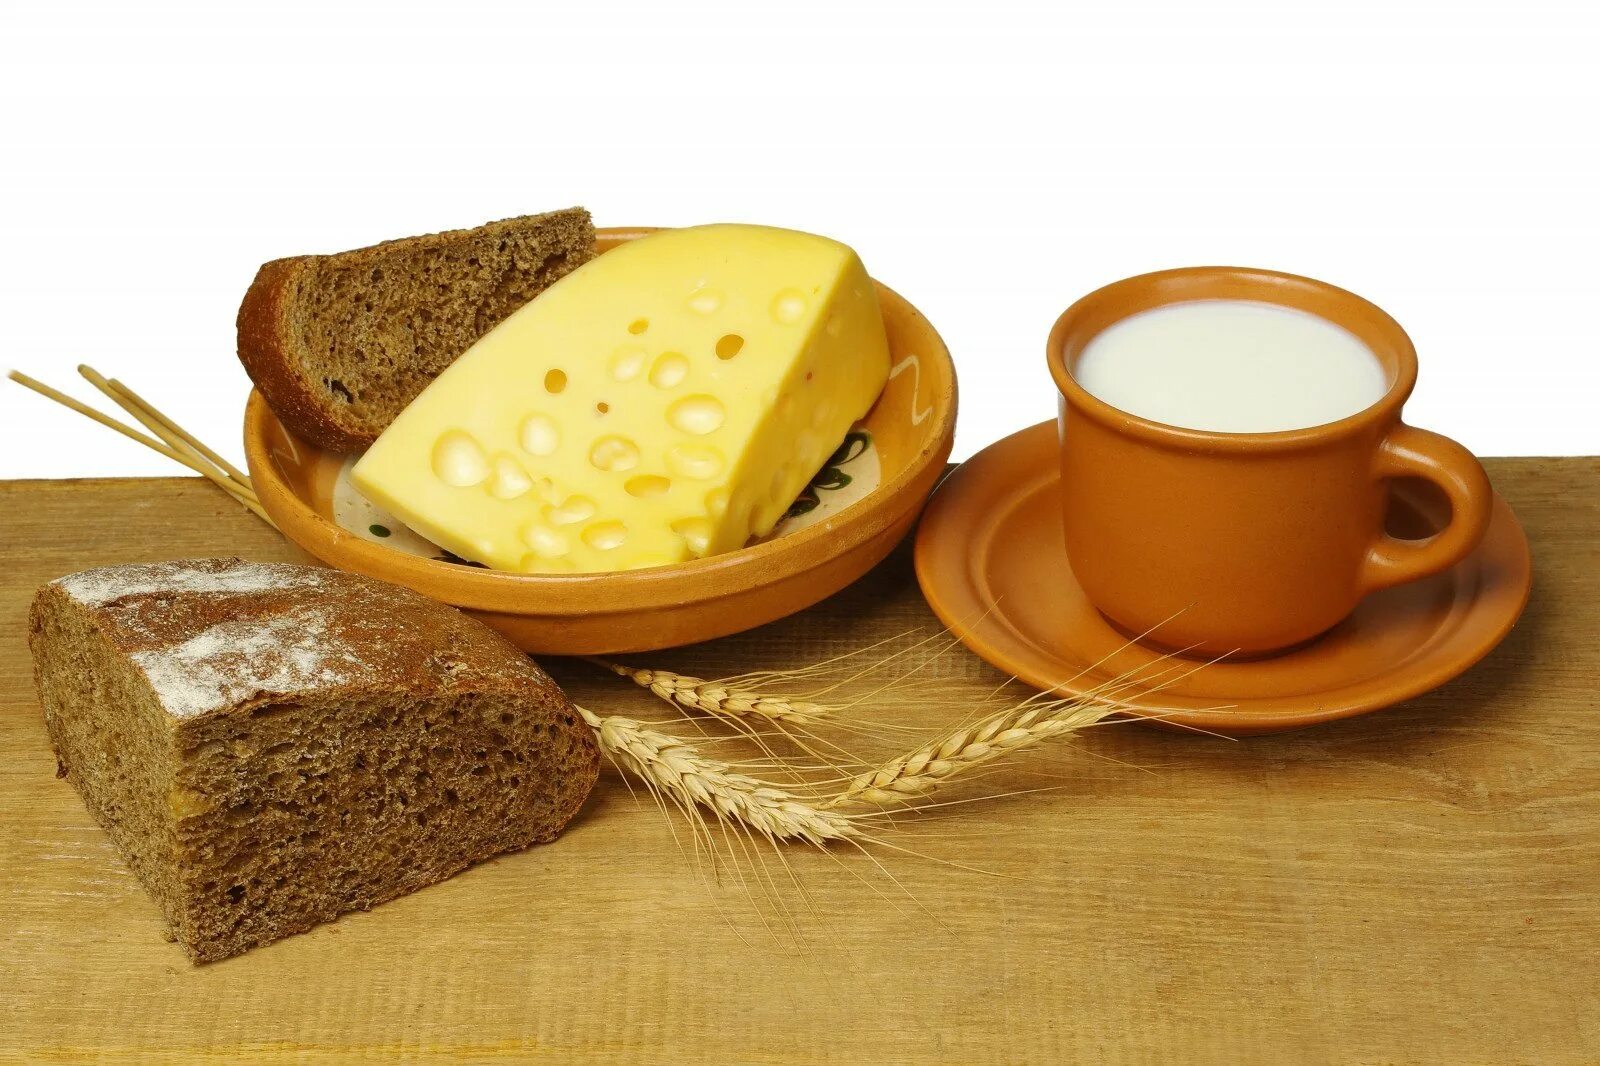 Хлеб молоко питание. Хлеб и сыр. Хлеб и молоко. Завтрак с хлебом. Молоко сыр хлеб.